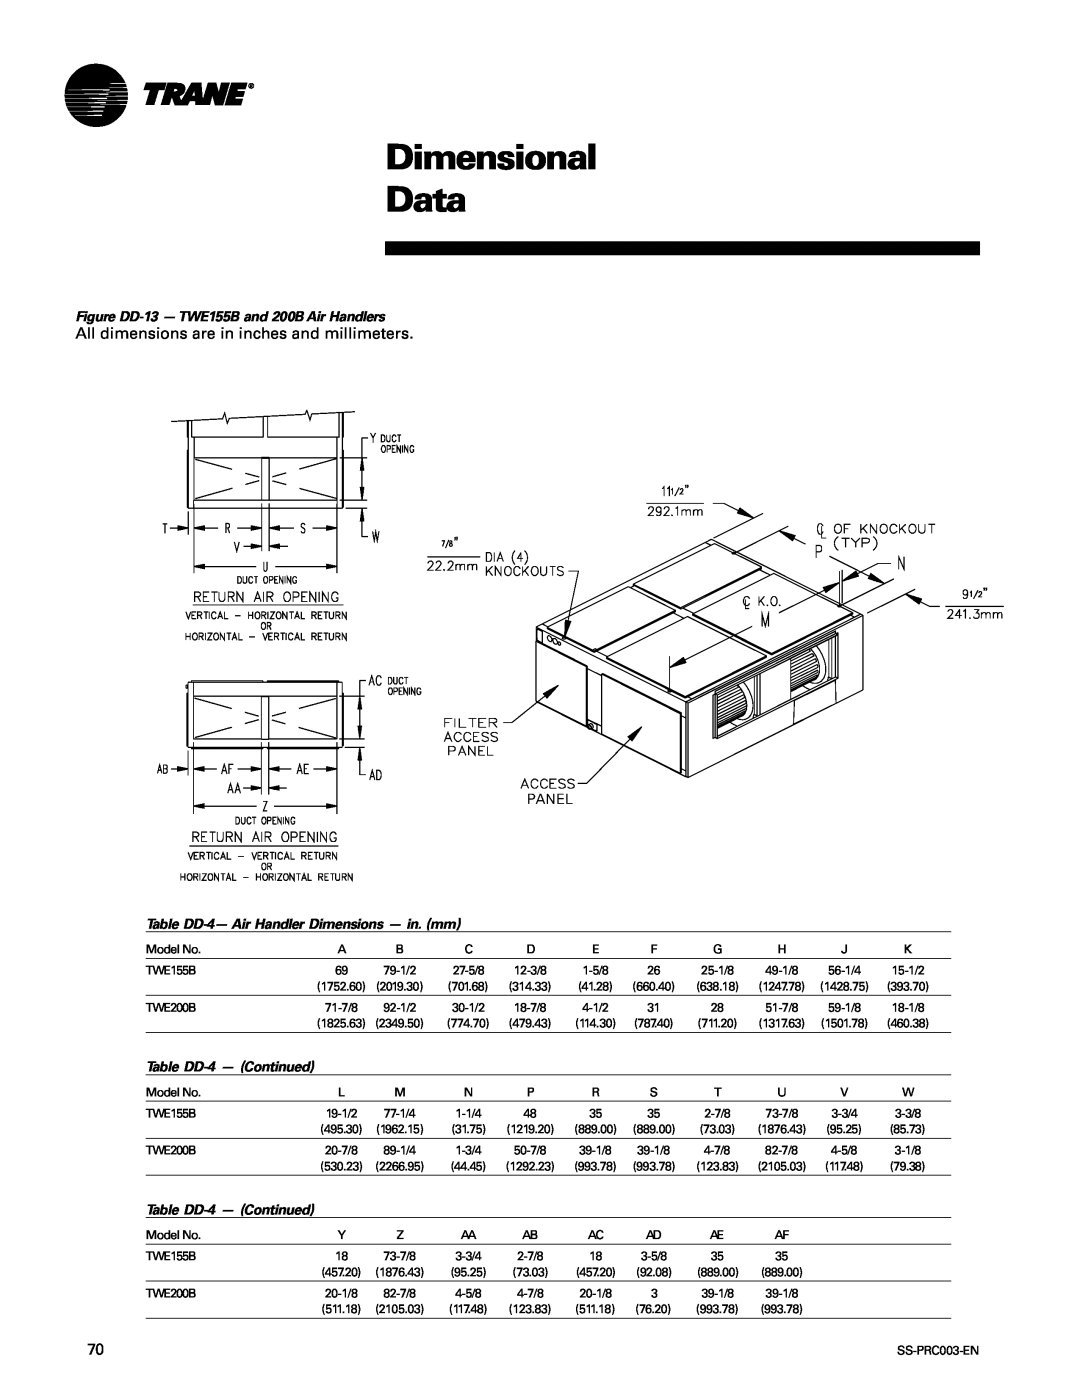 Trane SS-PRC003-EN manual Dimensional Data, Figure DD-13- TWE155B and 200B Air Handlers, Panel, Table DD-4- Continued 